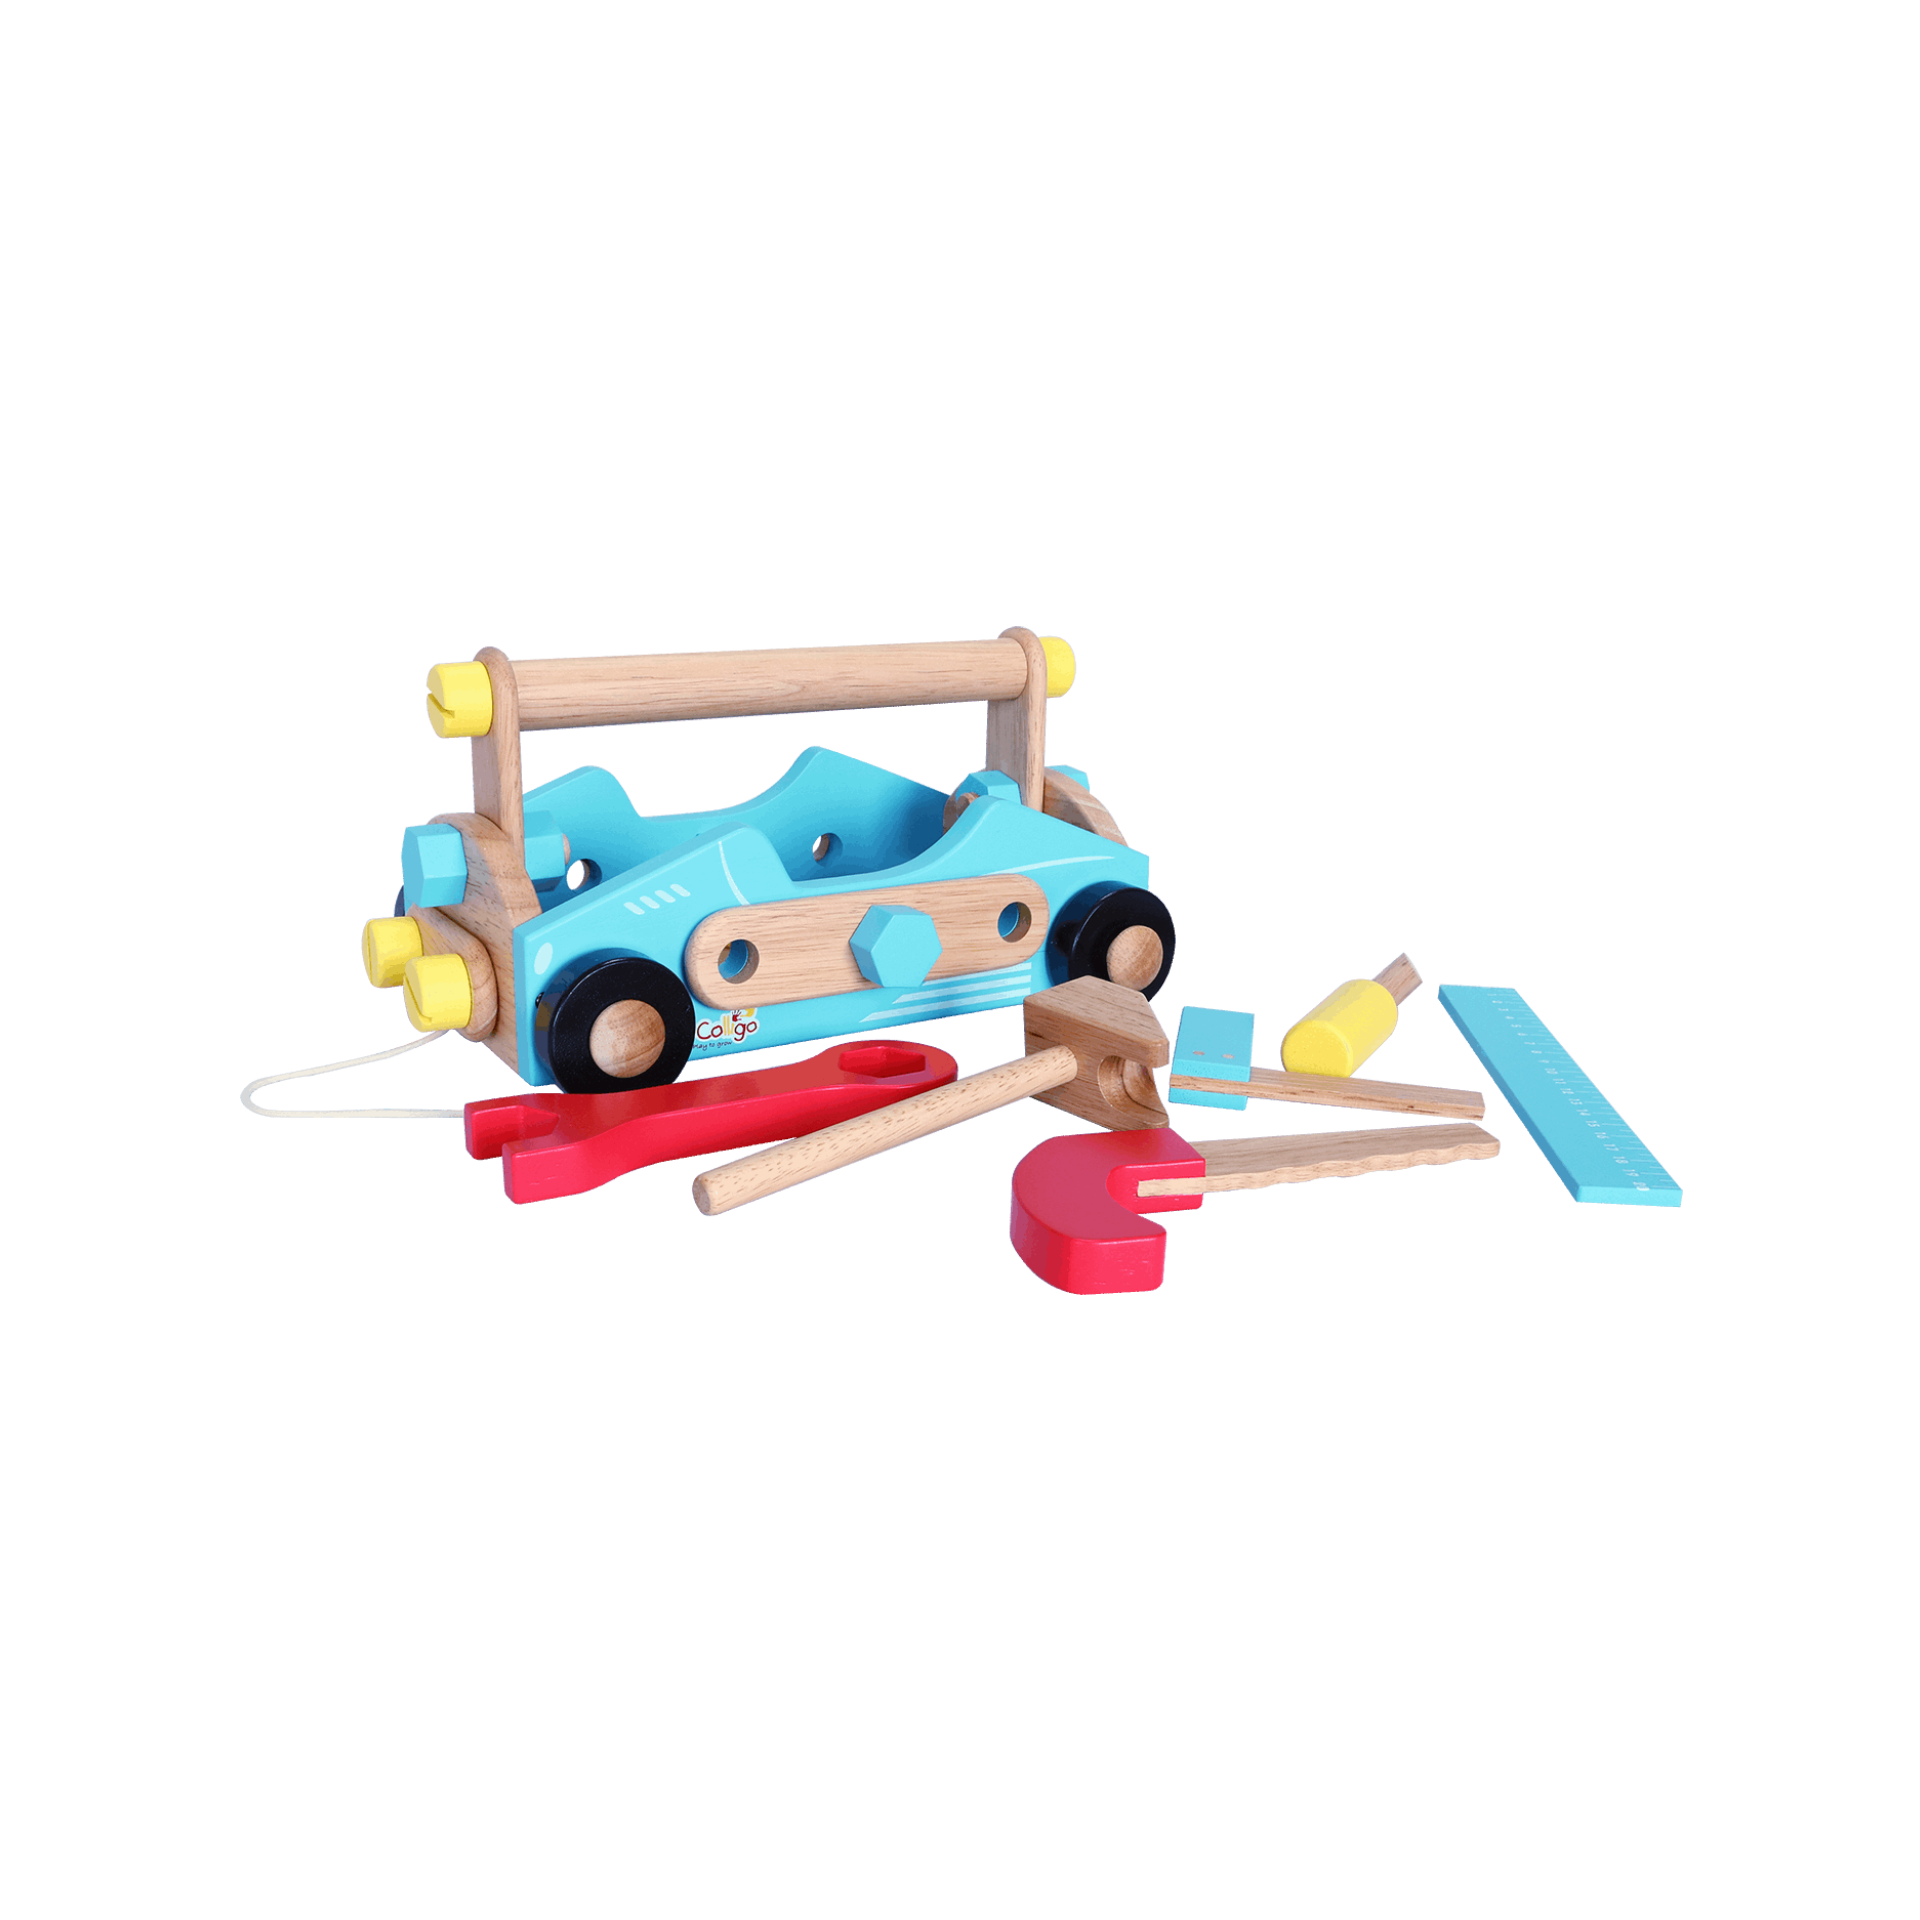 Tool -box with car shape